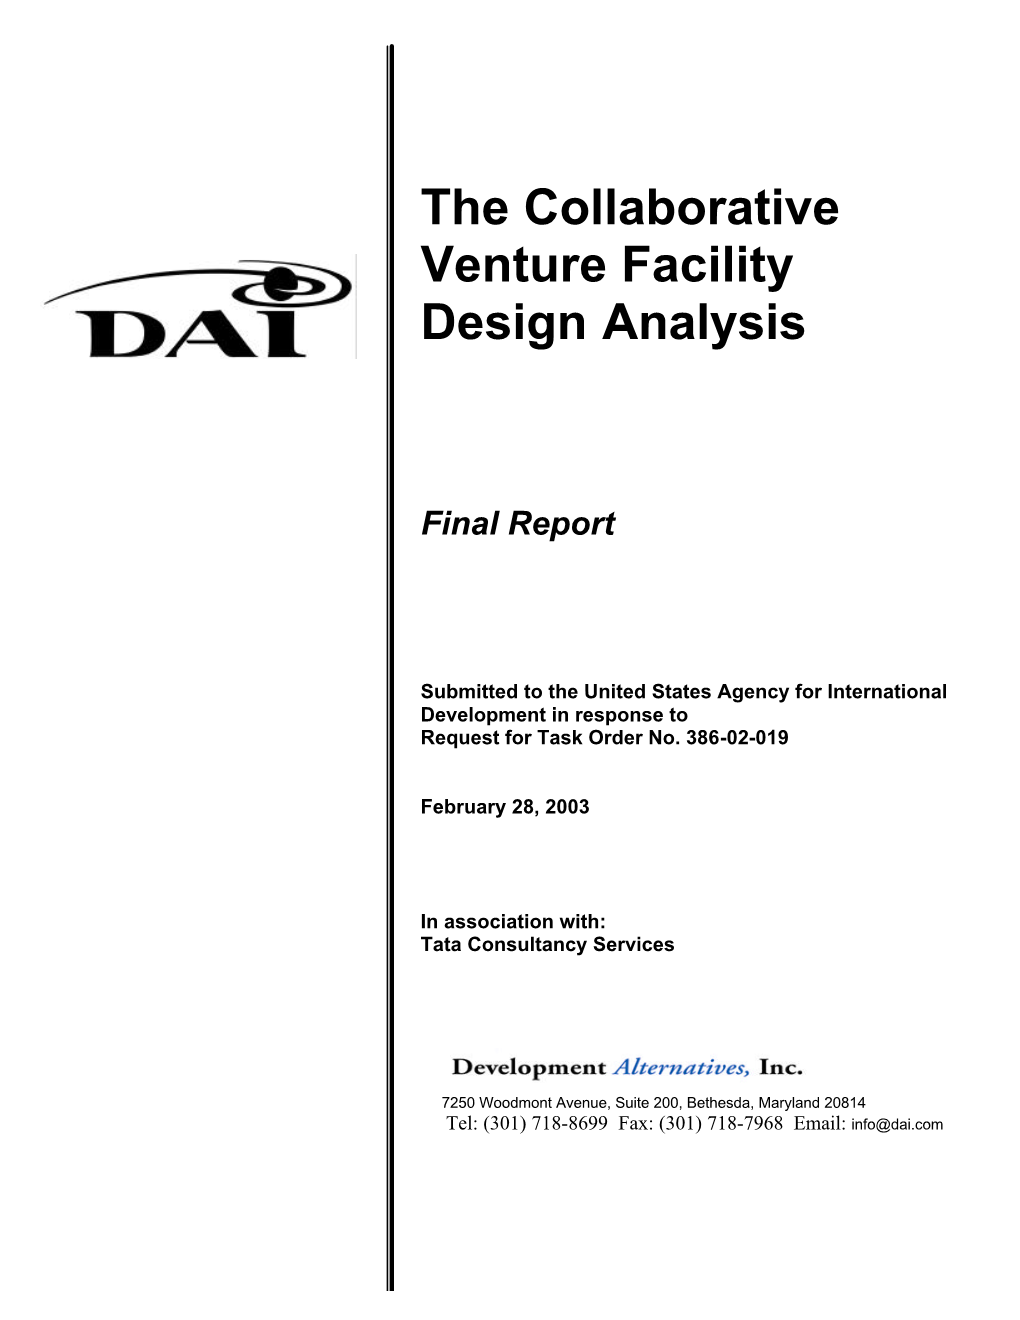 The Collaborative Venture Facility Design Analysis